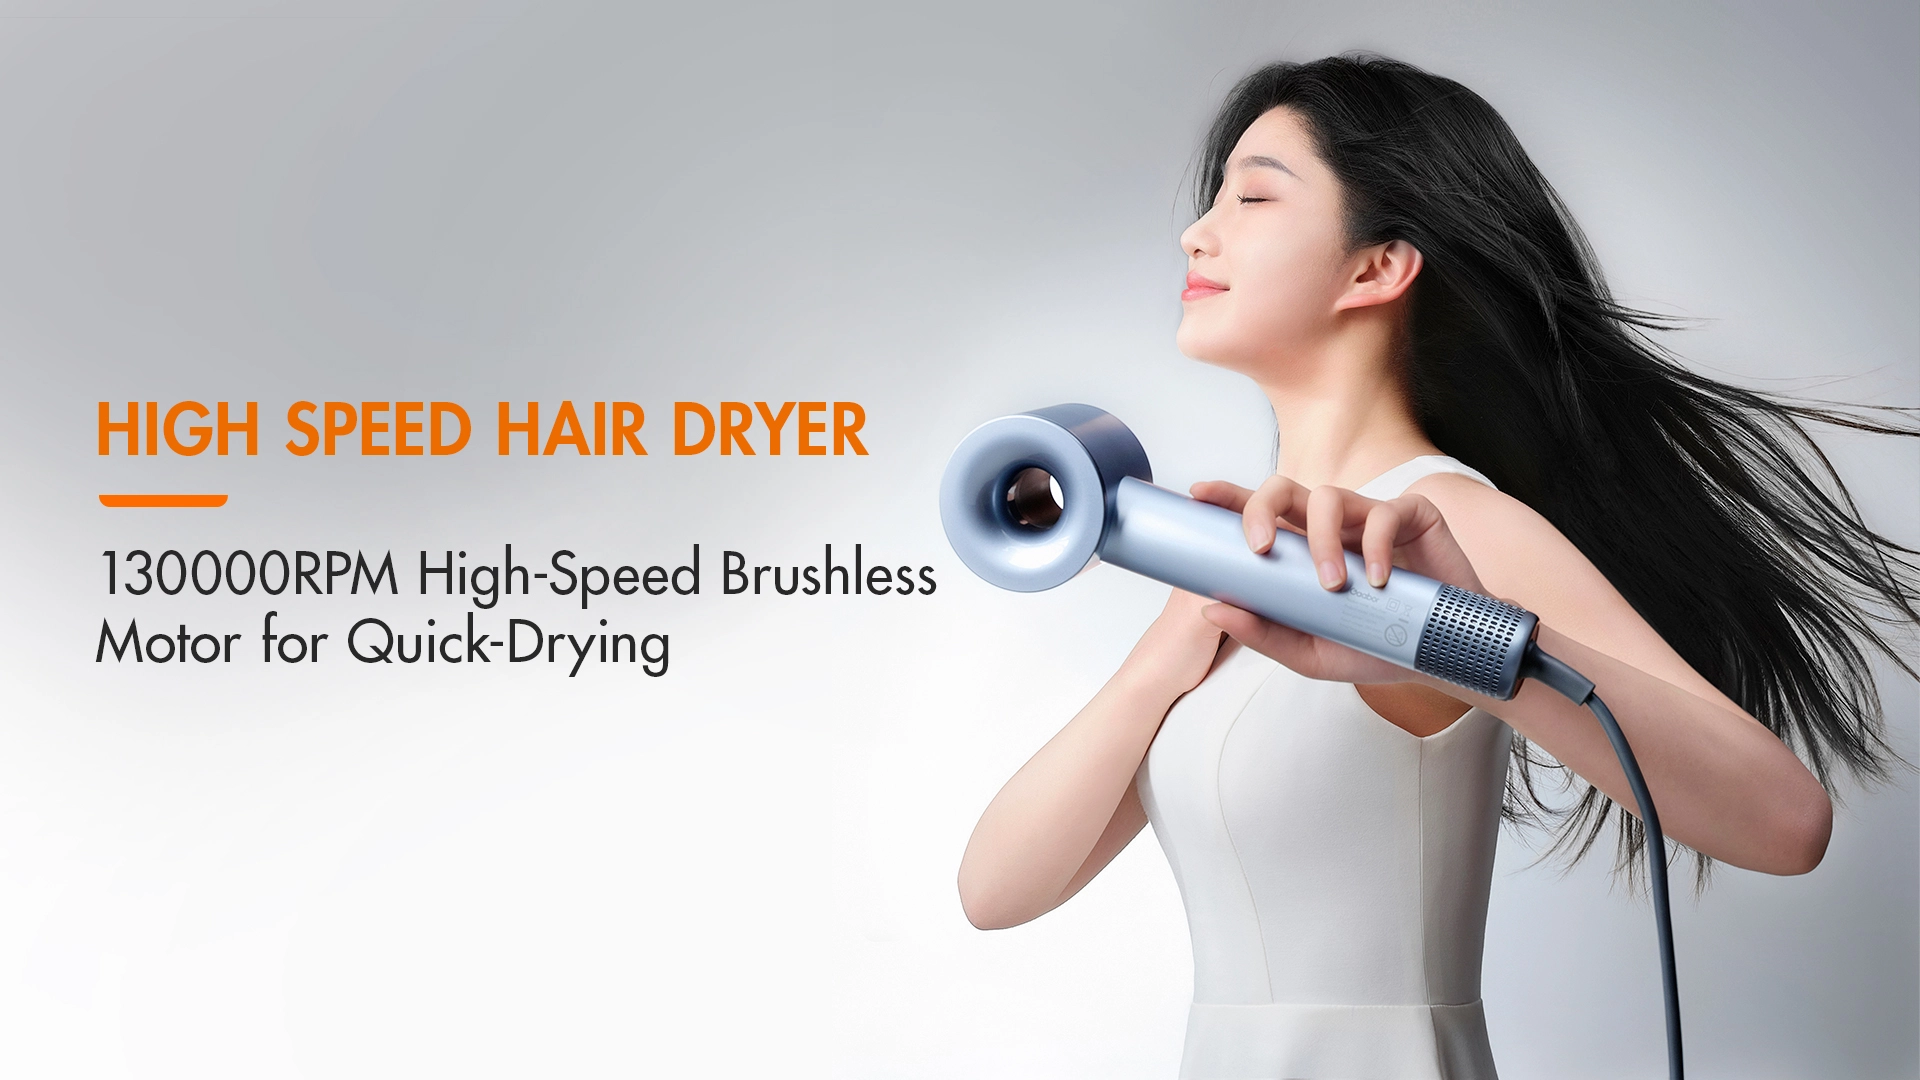 Gaabor high speed hair dryer